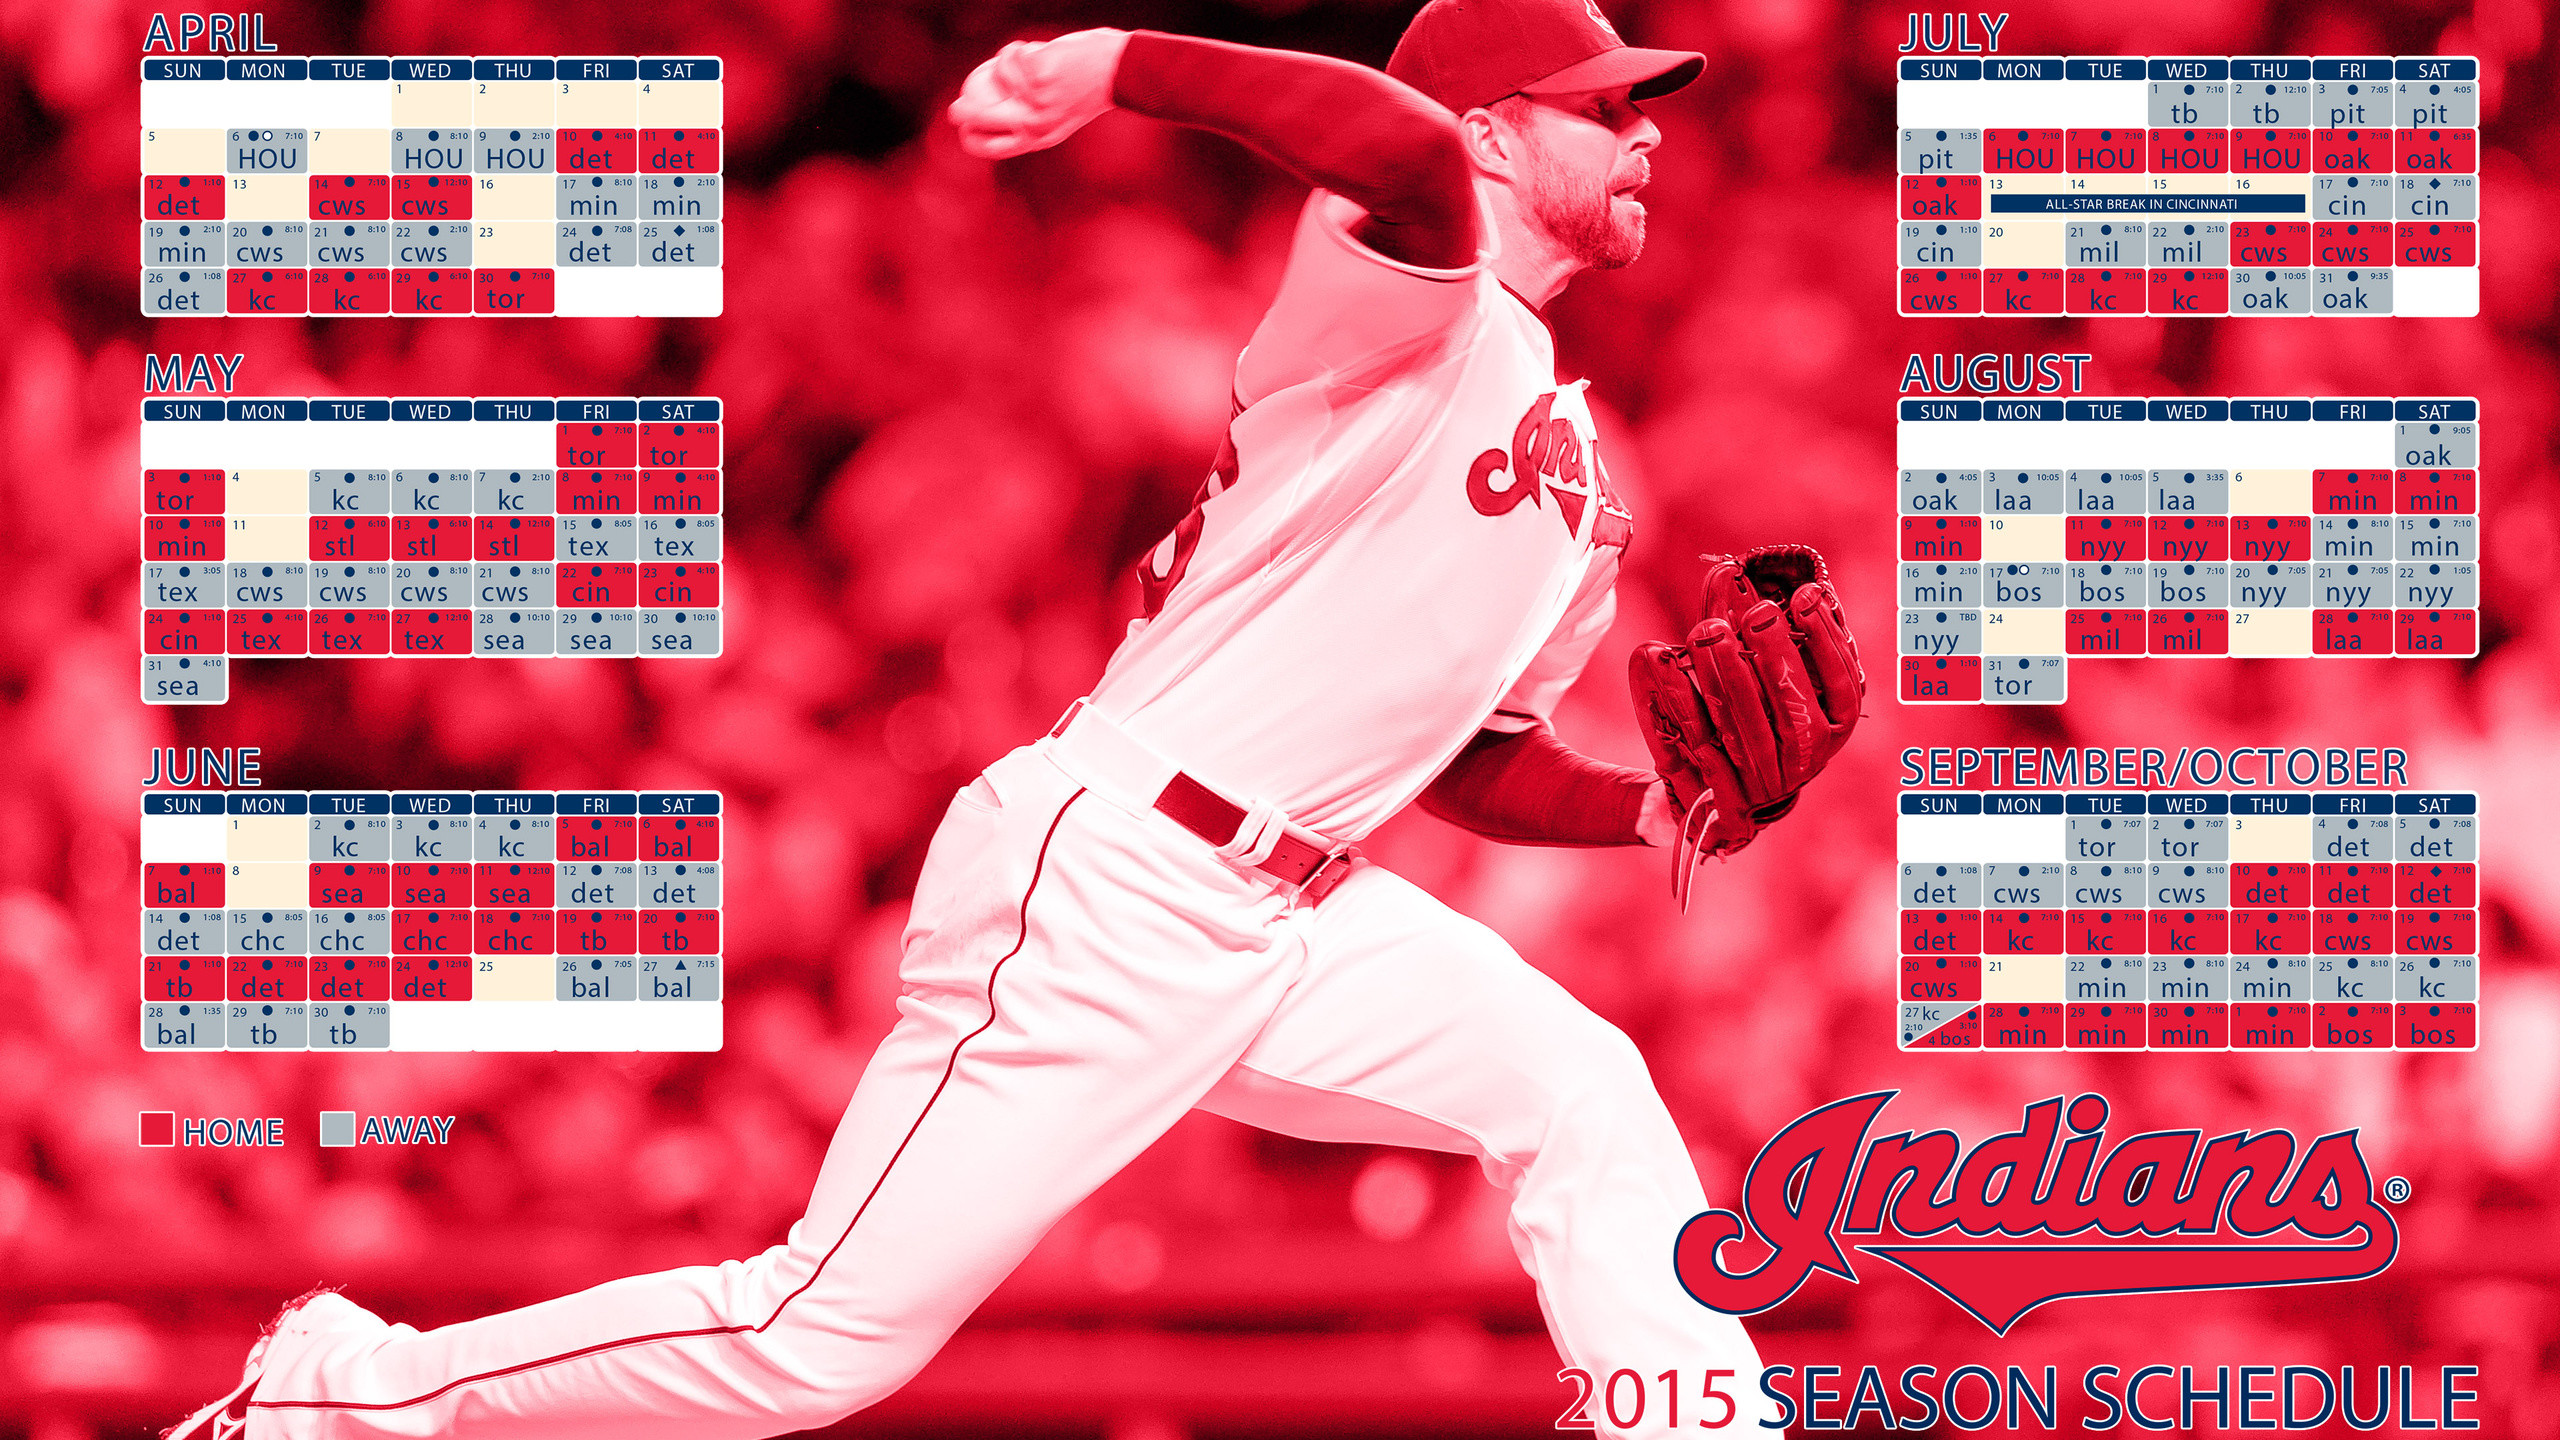 2560x1440 Baseball, 2015, Schedule, Cleveland Indians, Sports, Cleveland Indians Mlb  Schedule 2015